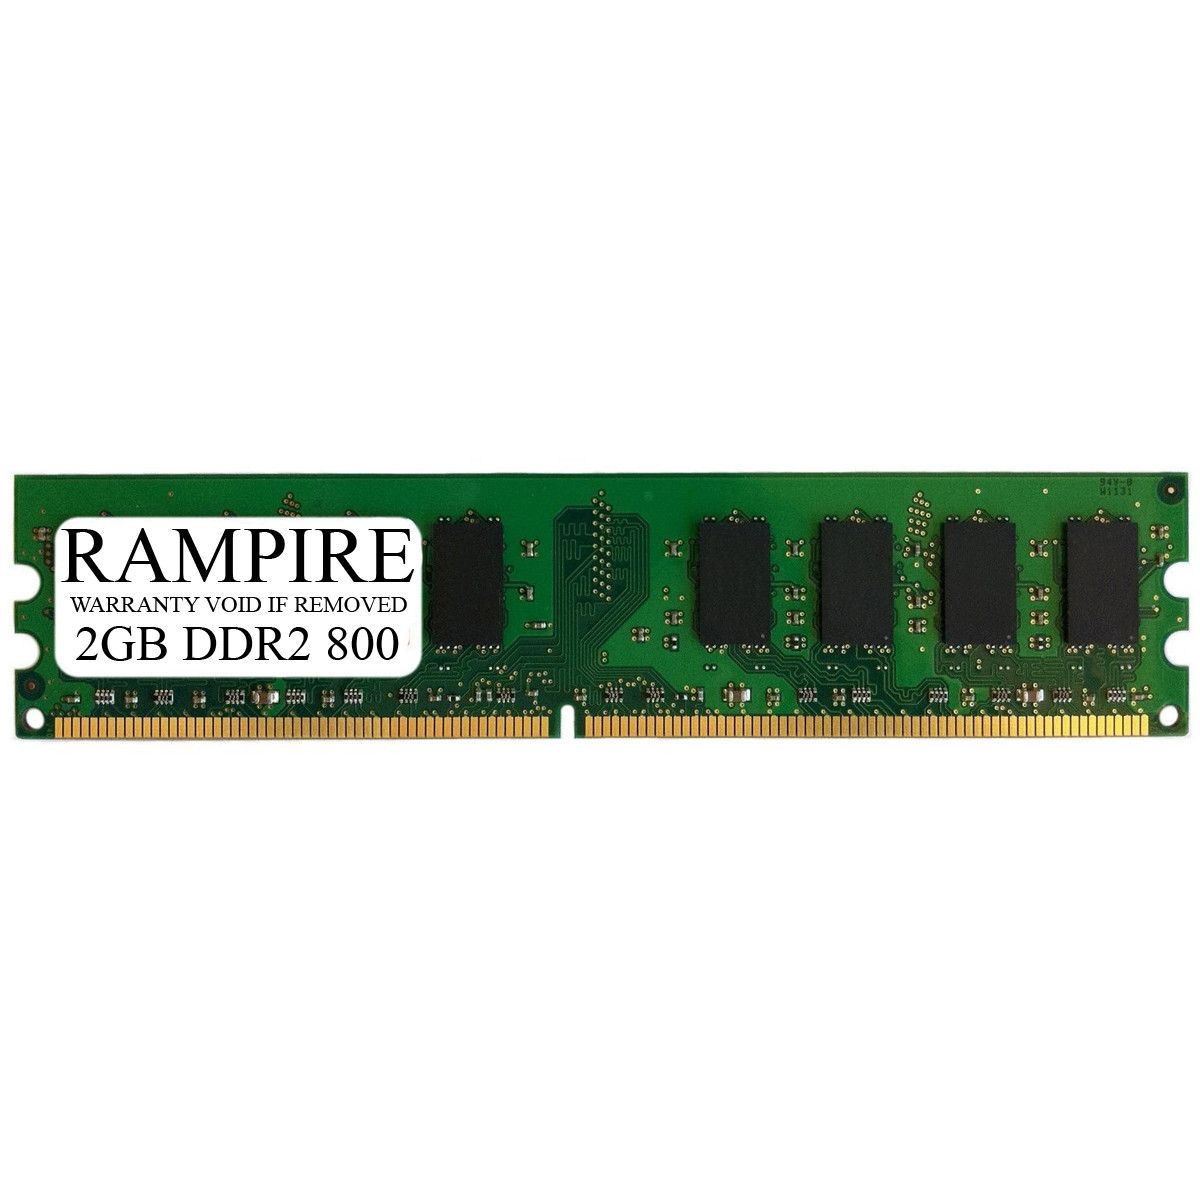 RAMPIRE 2GB DDR2 800 (PC2 6400) 240-Pin DDR2 SDRAM 1.8V 2Rx8 Non-ECC UDIMM Memory for Desktop PC